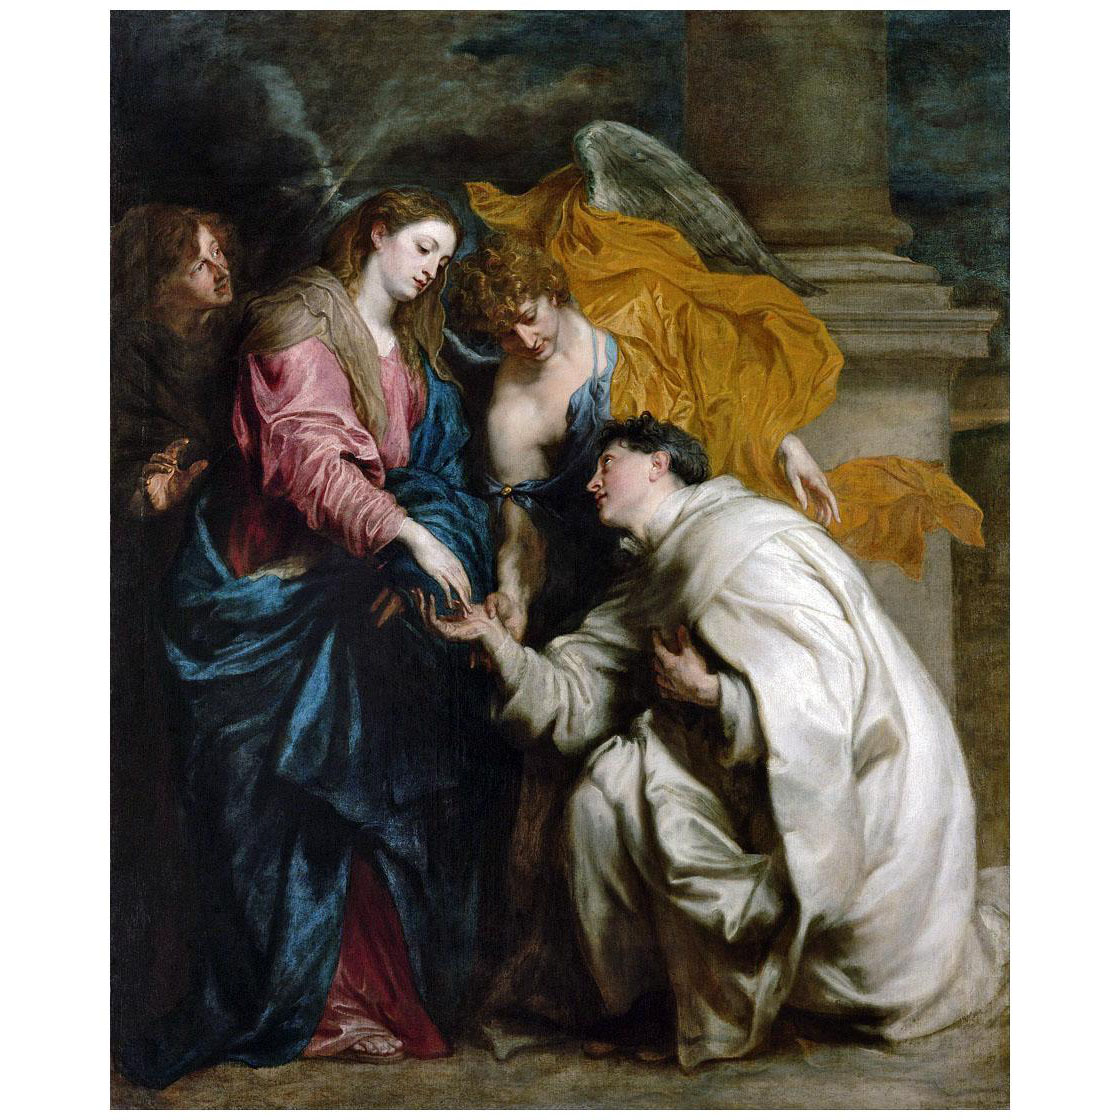 Anthony van Dyck. The Vision of the Blessed Hermann Joseph. 1629. KHM Wien